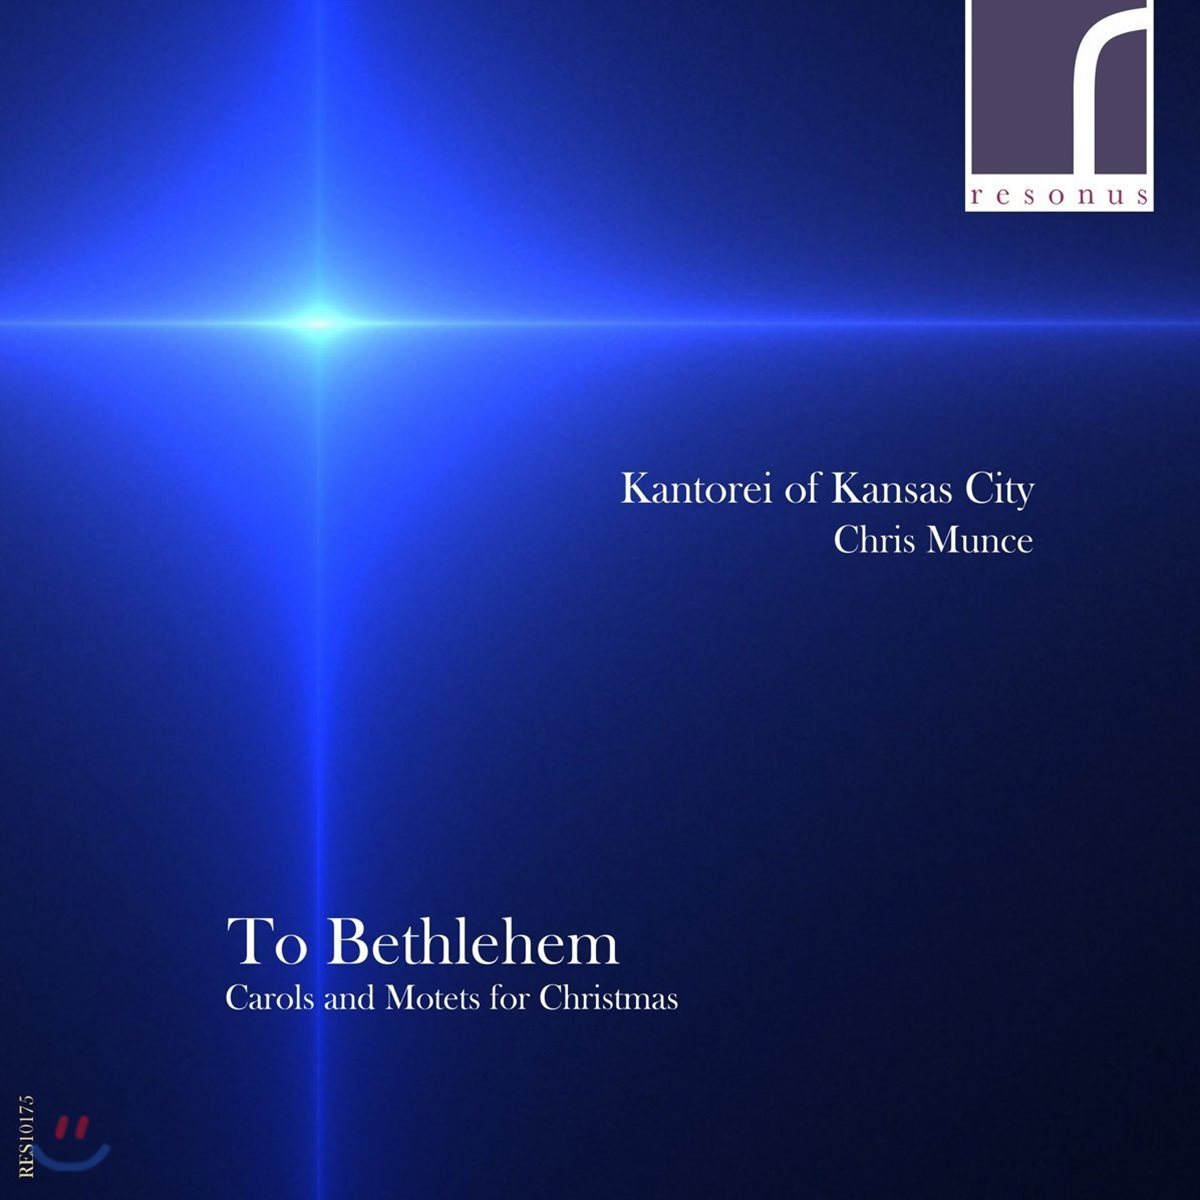 Kantorei of Kansas City 베들레헴으로 - 크리스마스 캐럴과 모테트 (To Bethlehem - Carols and Motets for Christmas)